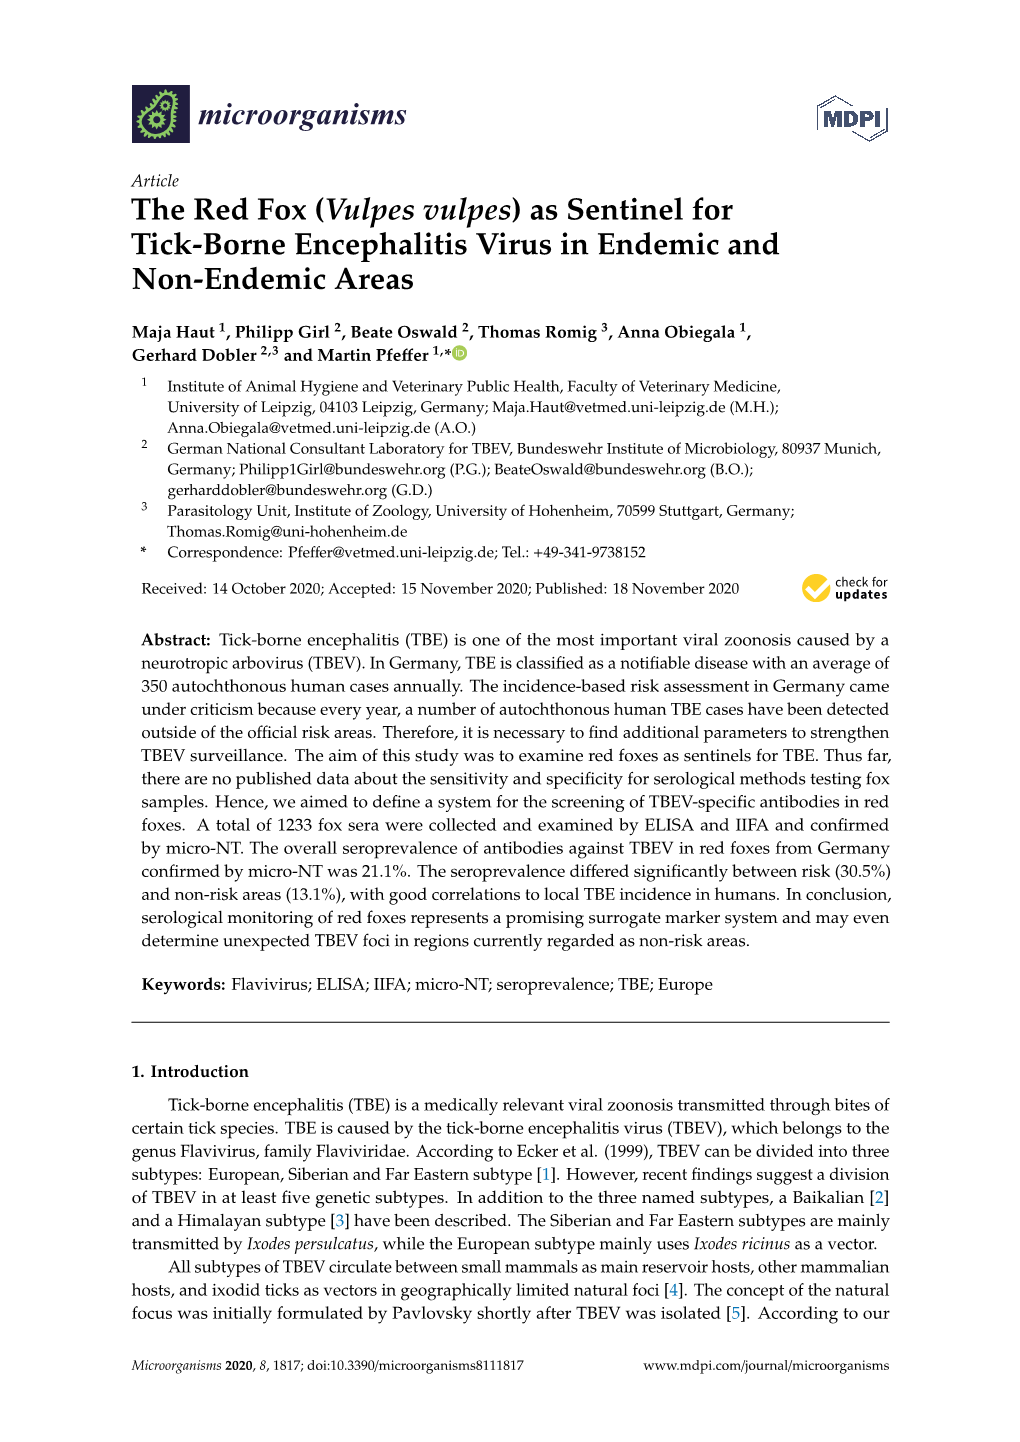 As Sentinel for Tick-Borne Encephalitis Virus in Endemic and Non-Endemic Areas